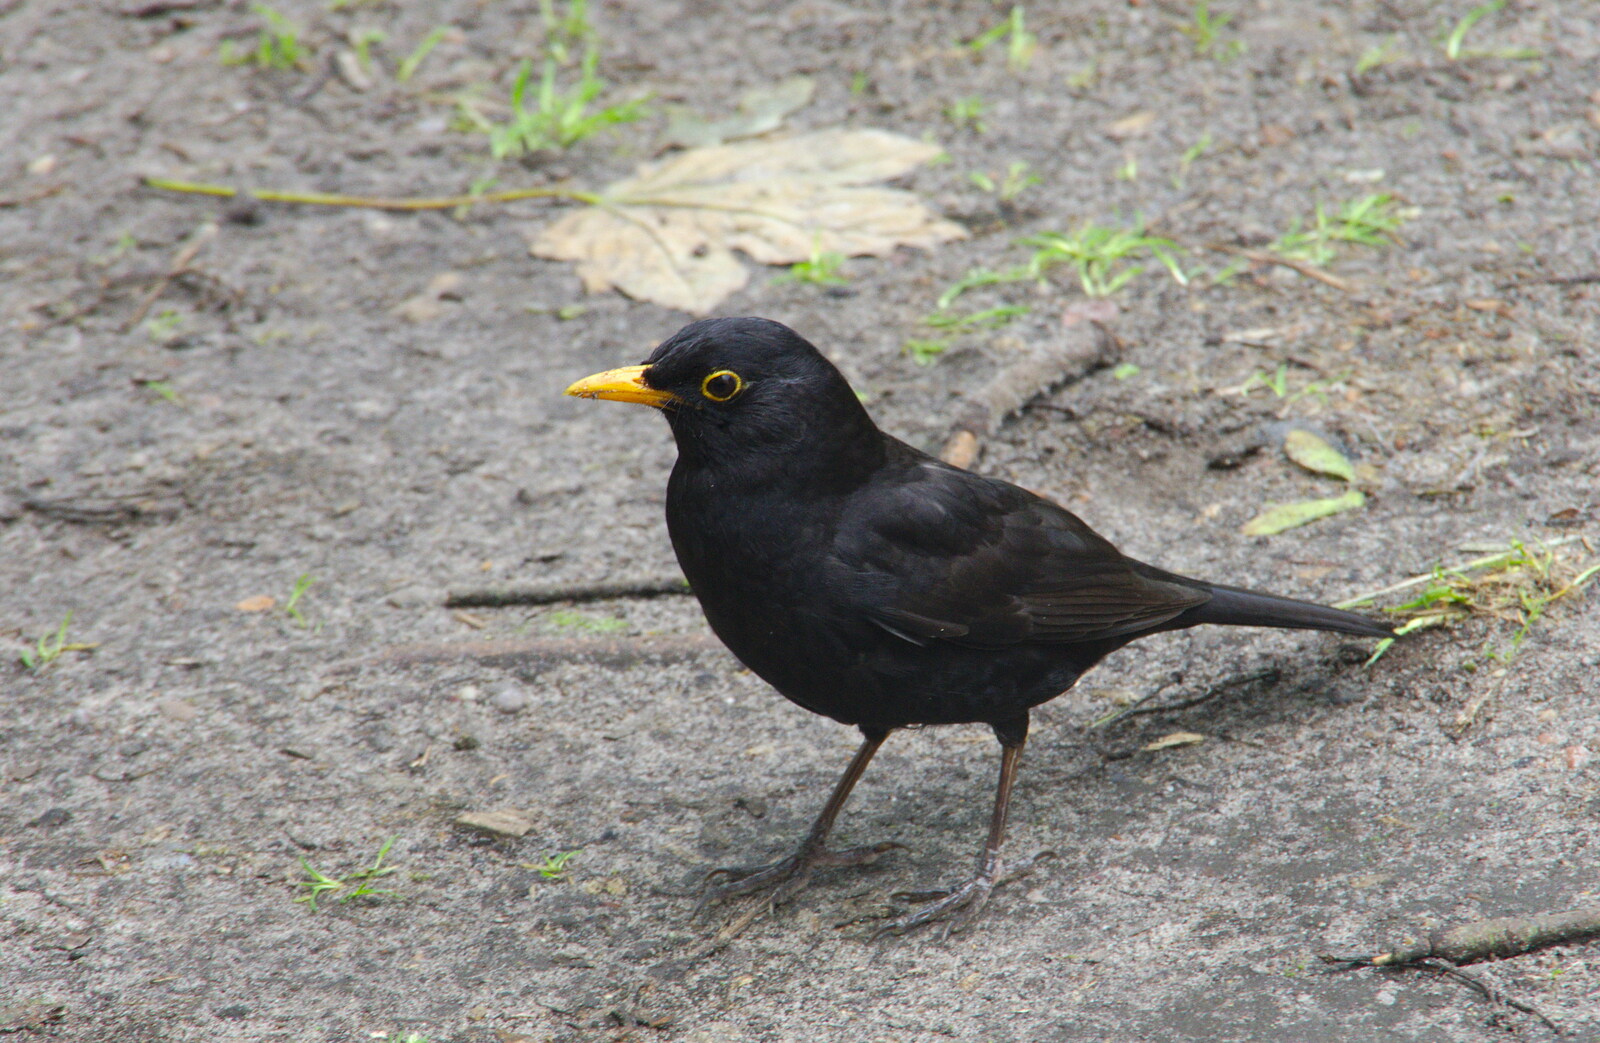 A cheeky blackbird wanders about from Cliff House Camping, Dunwich, Suffolk - 15th June 2019